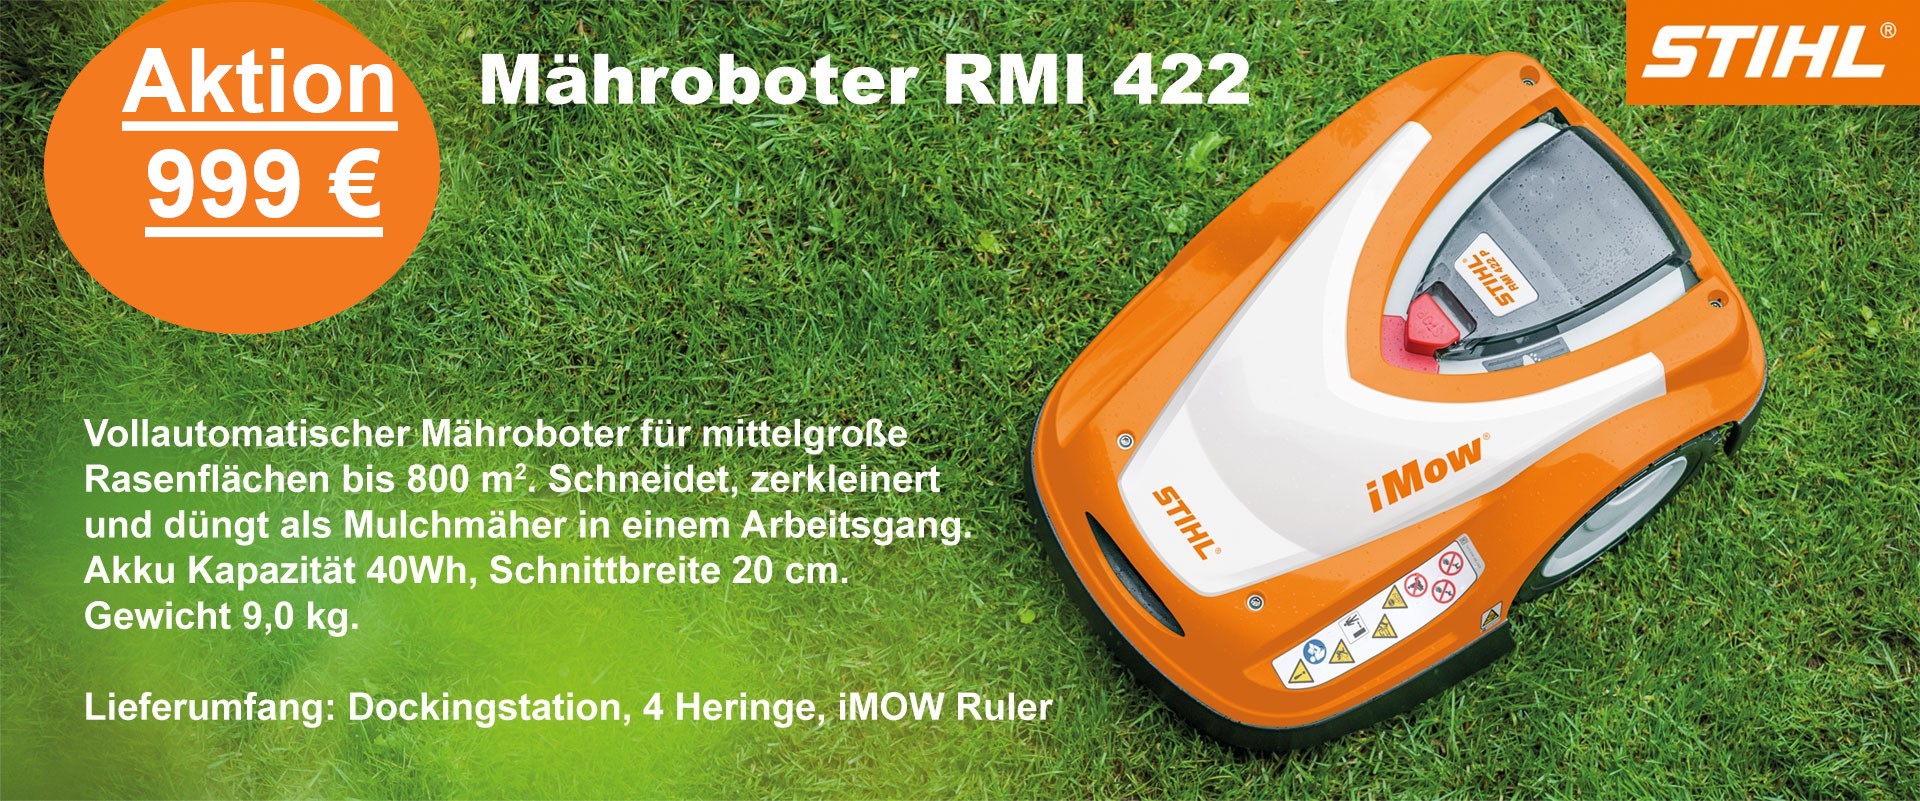 Angebot-Maehroboter-RMI422-2